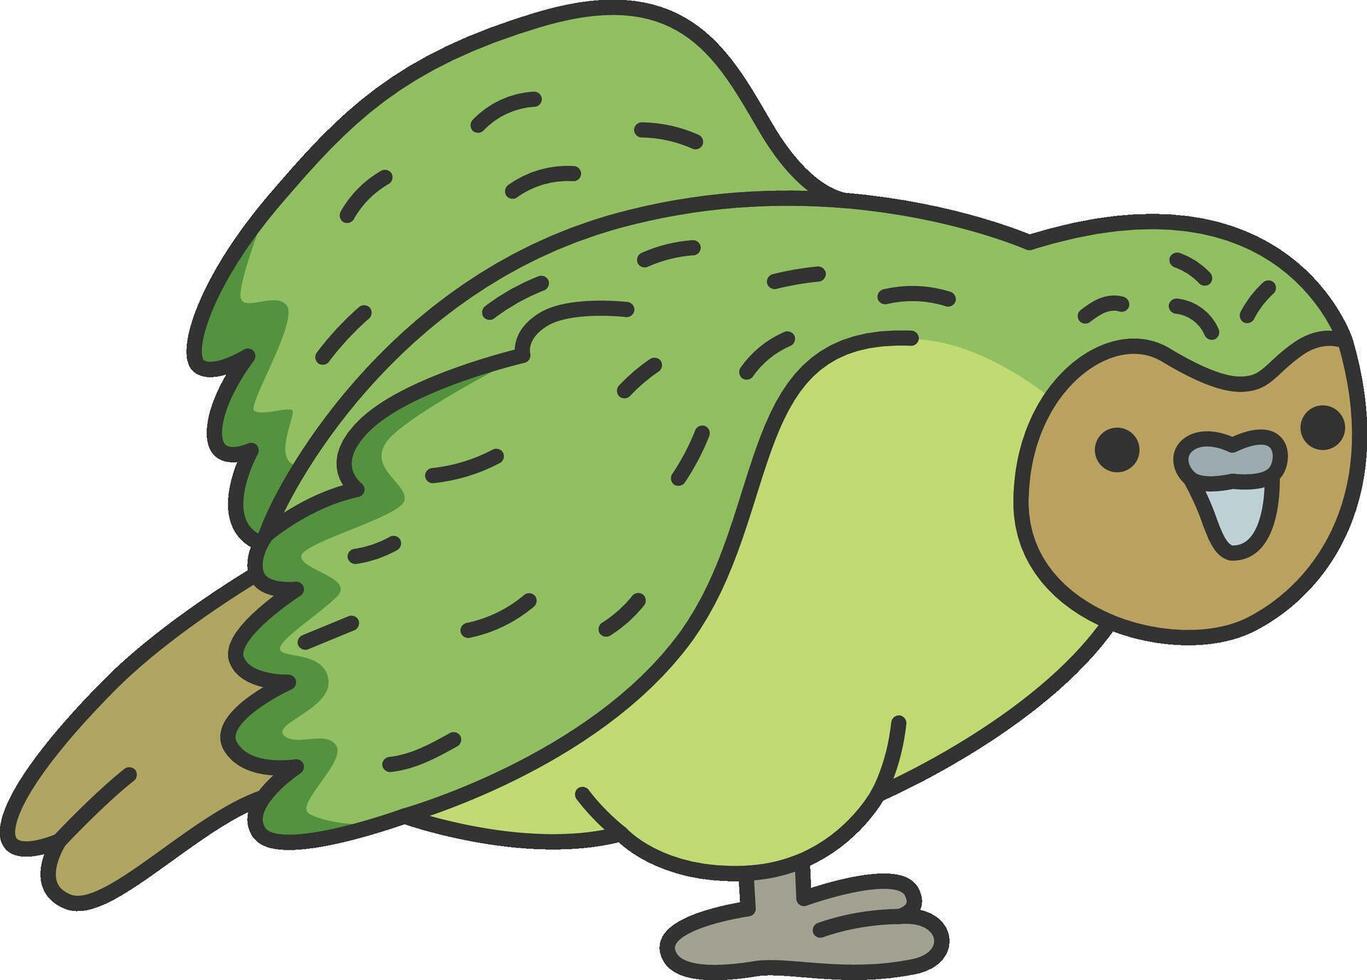 Kakapo Parrot. Vector illustration in doodle style on white background